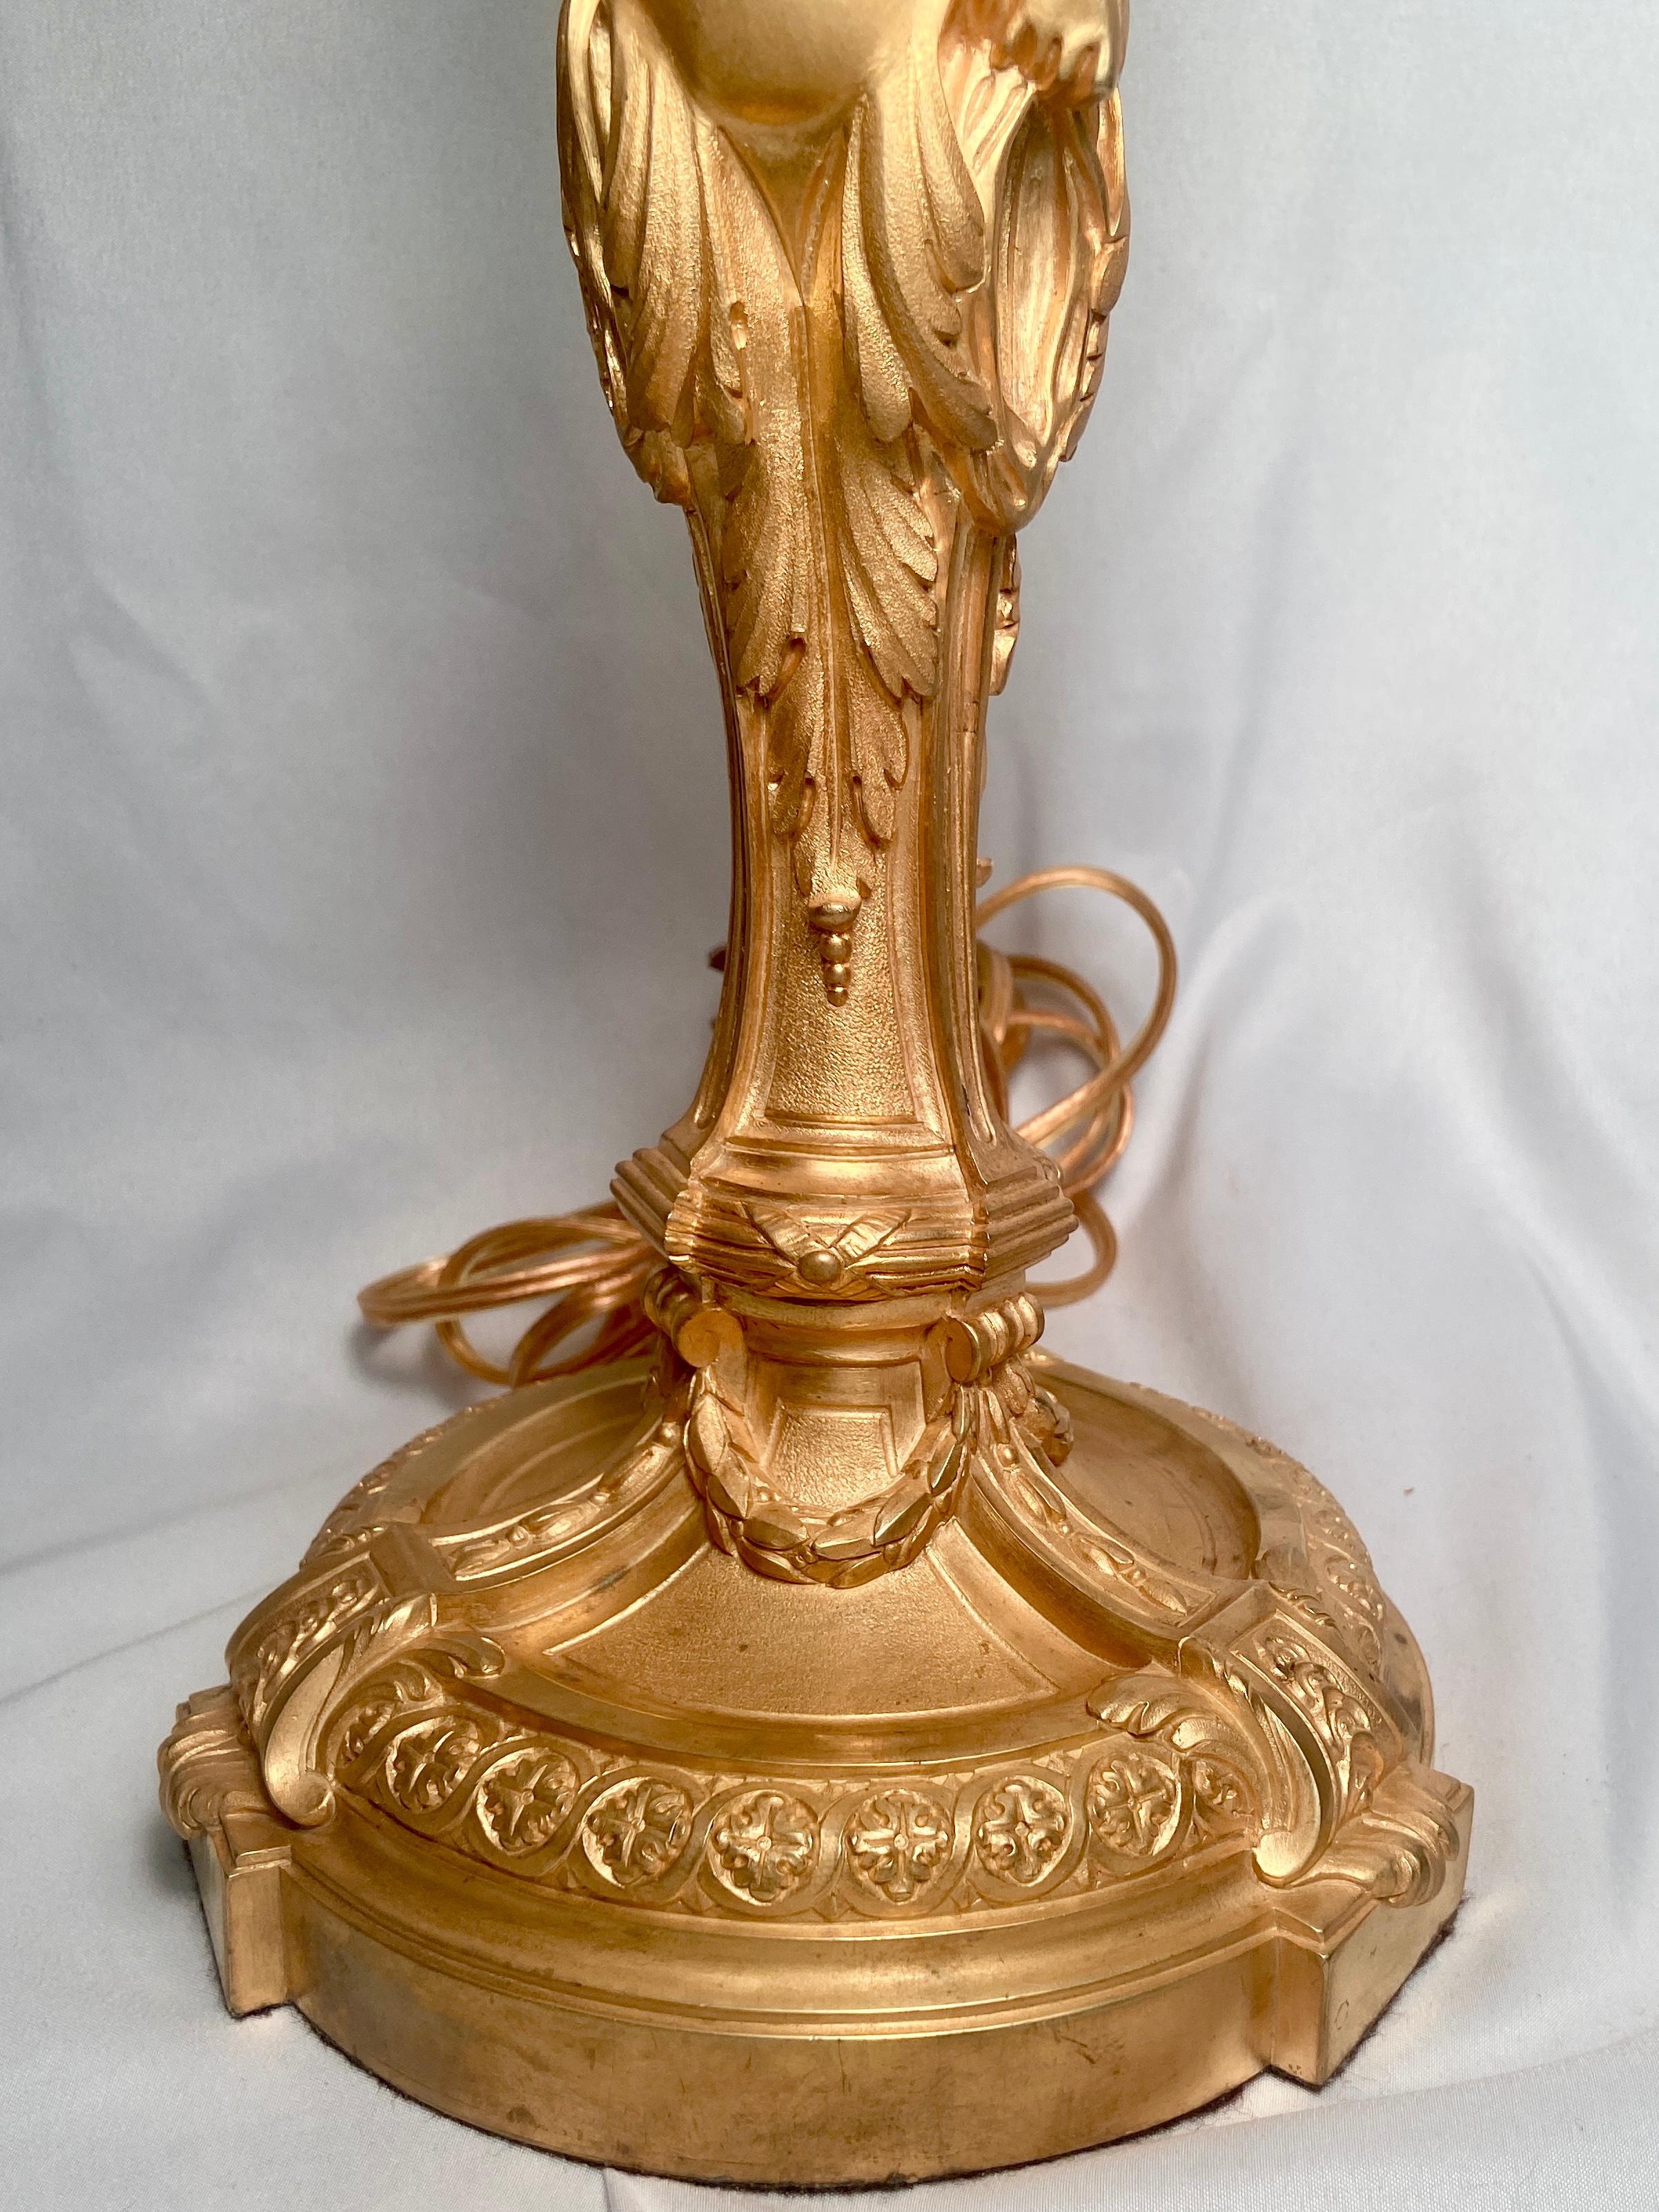 19th Century Antique French Napoleon III Ormolu Figural Lamp with Cherubs, Circa 1855-1875.